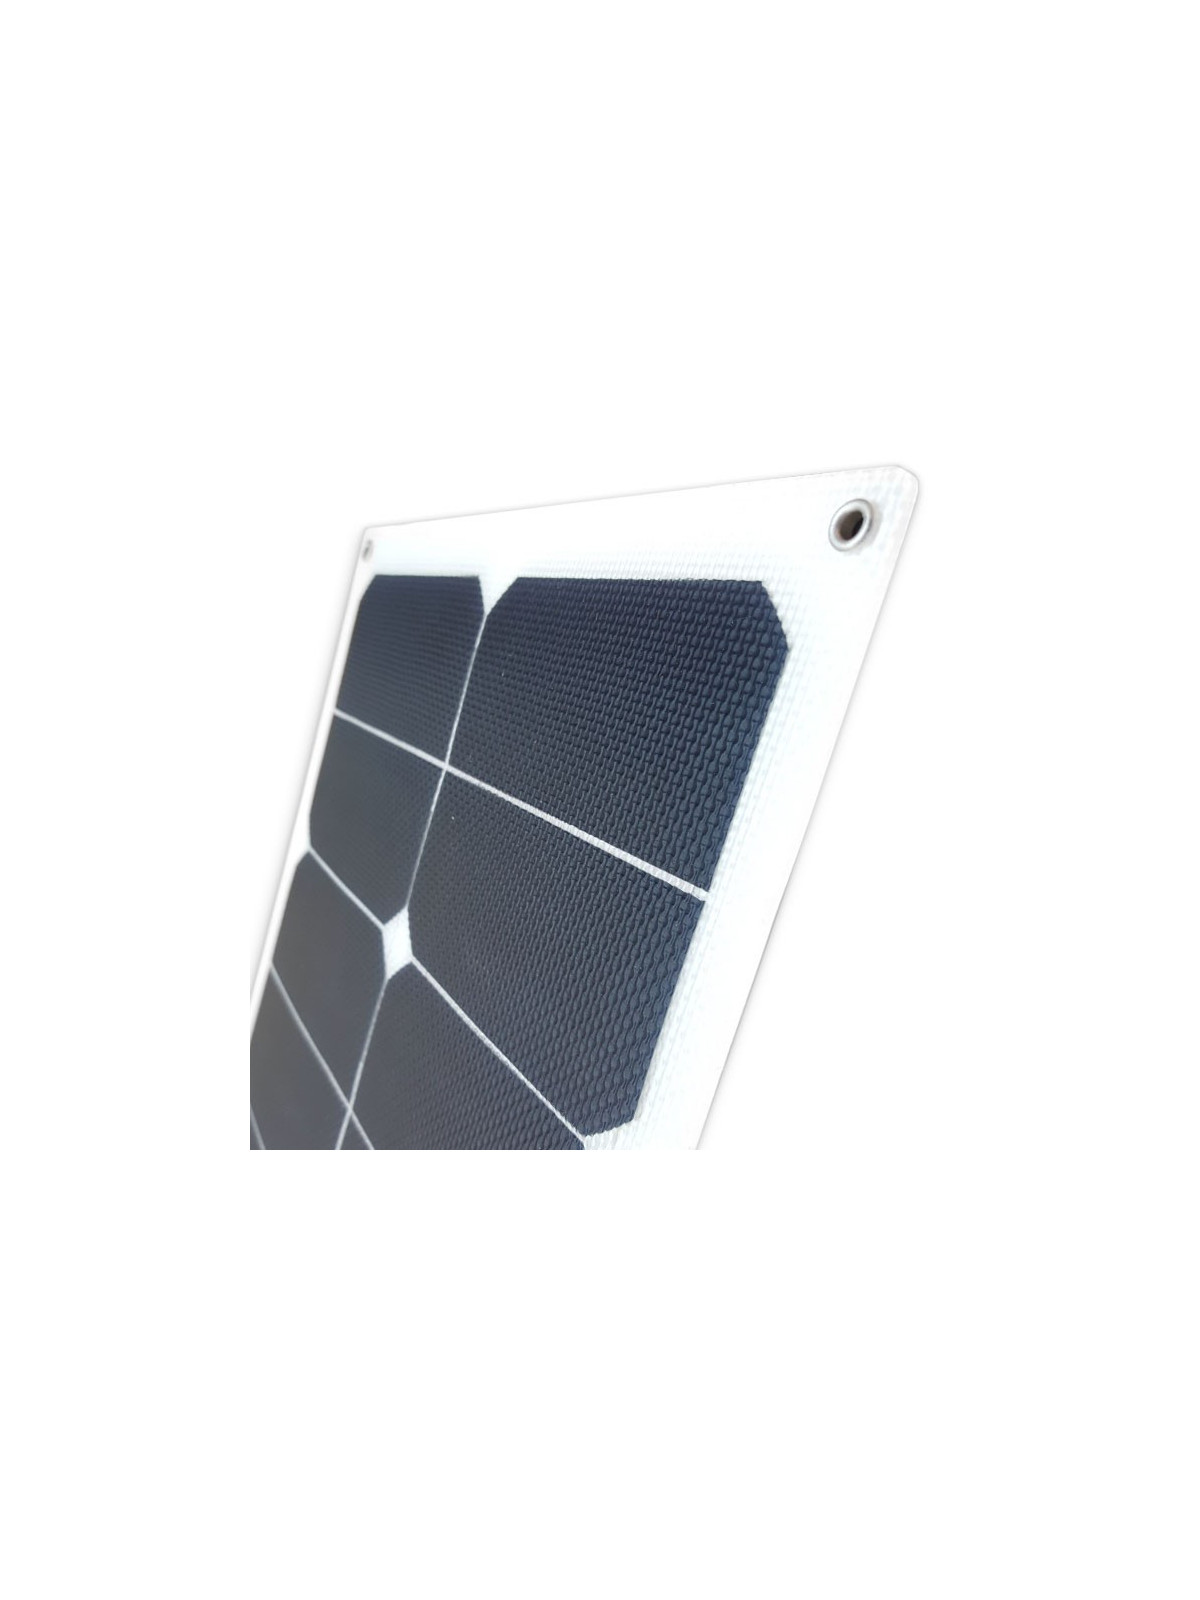 MX FLEX 50pw PROTECT 12V solar panel